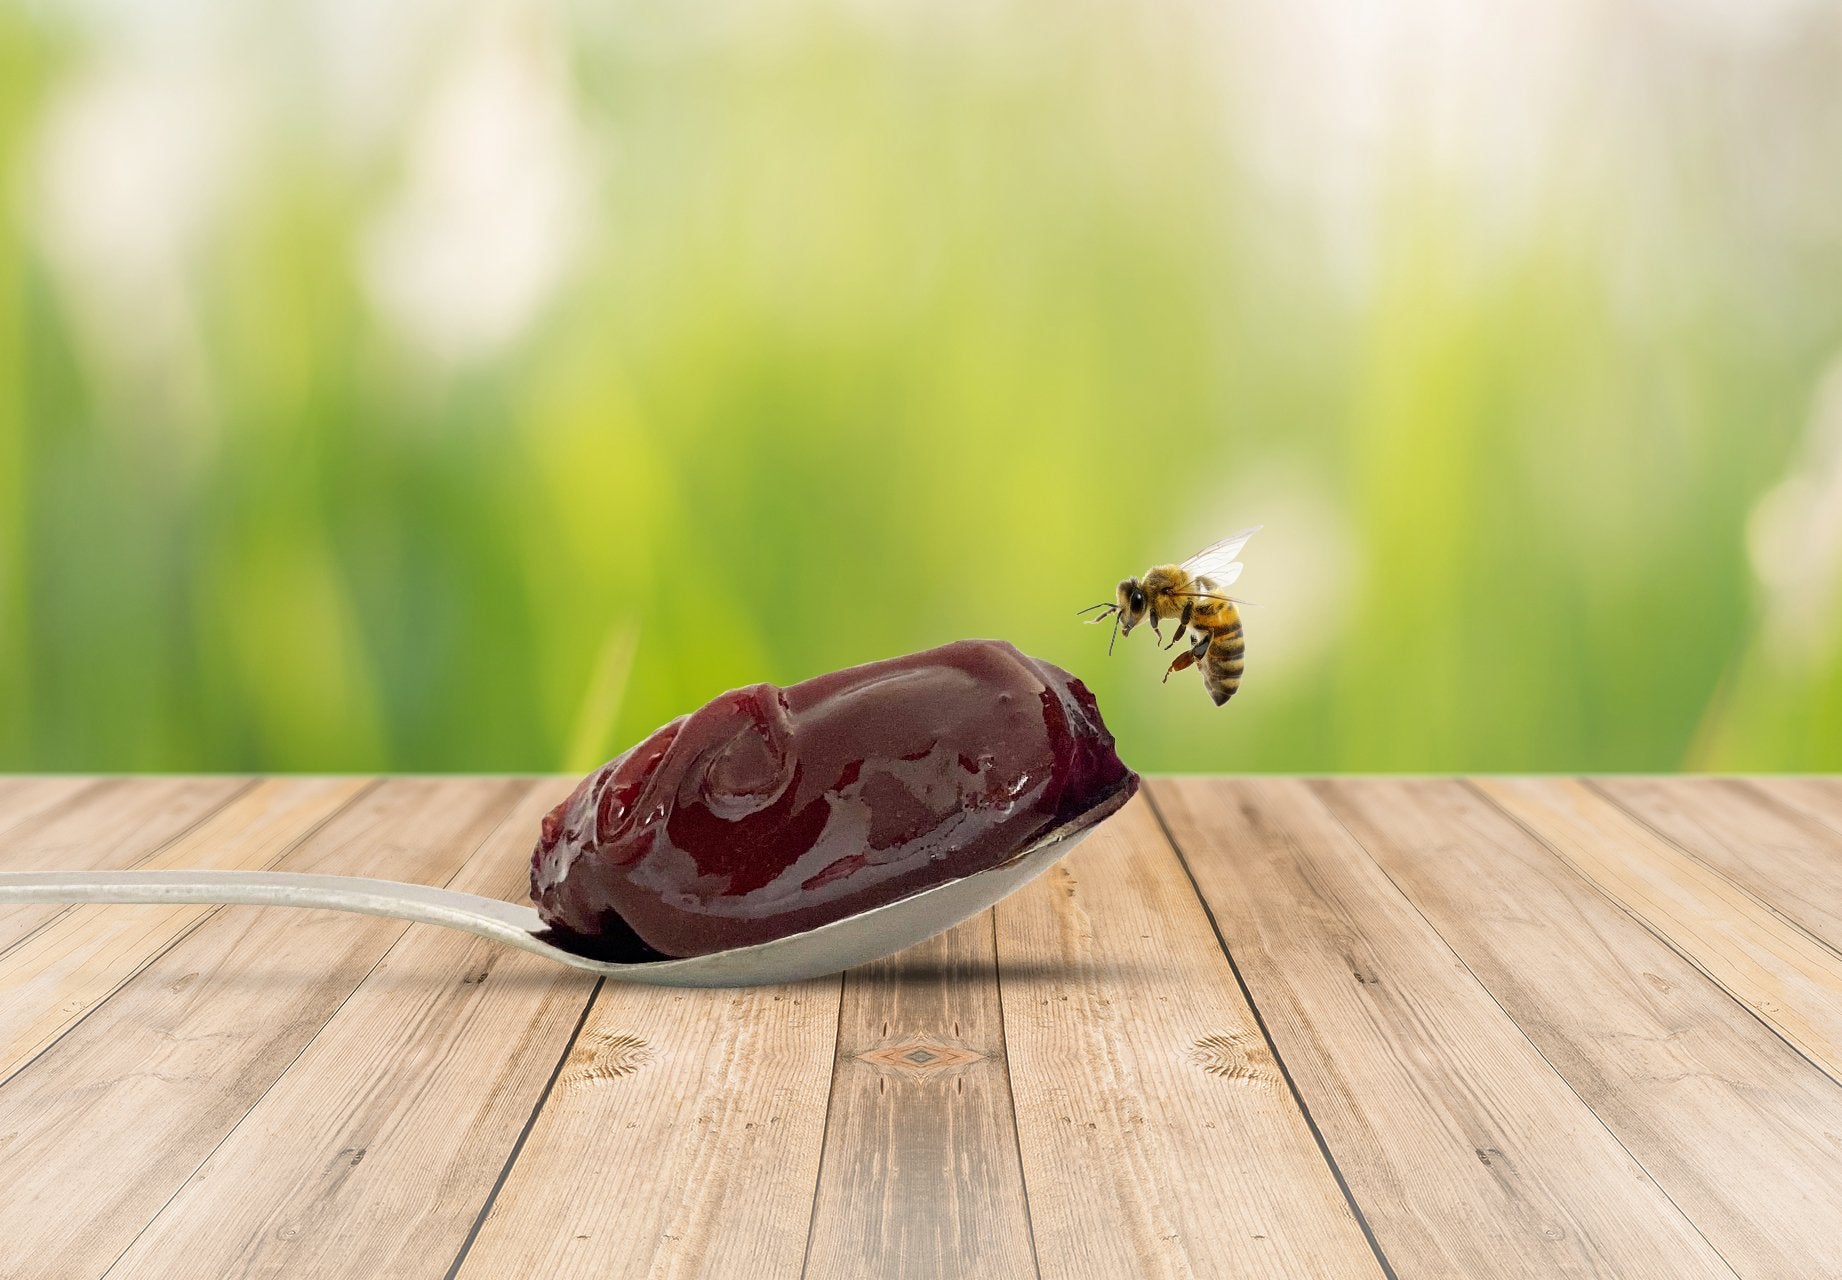 The Wild Story of Manuka, The Bees, and Honey - TURNER New Zealand